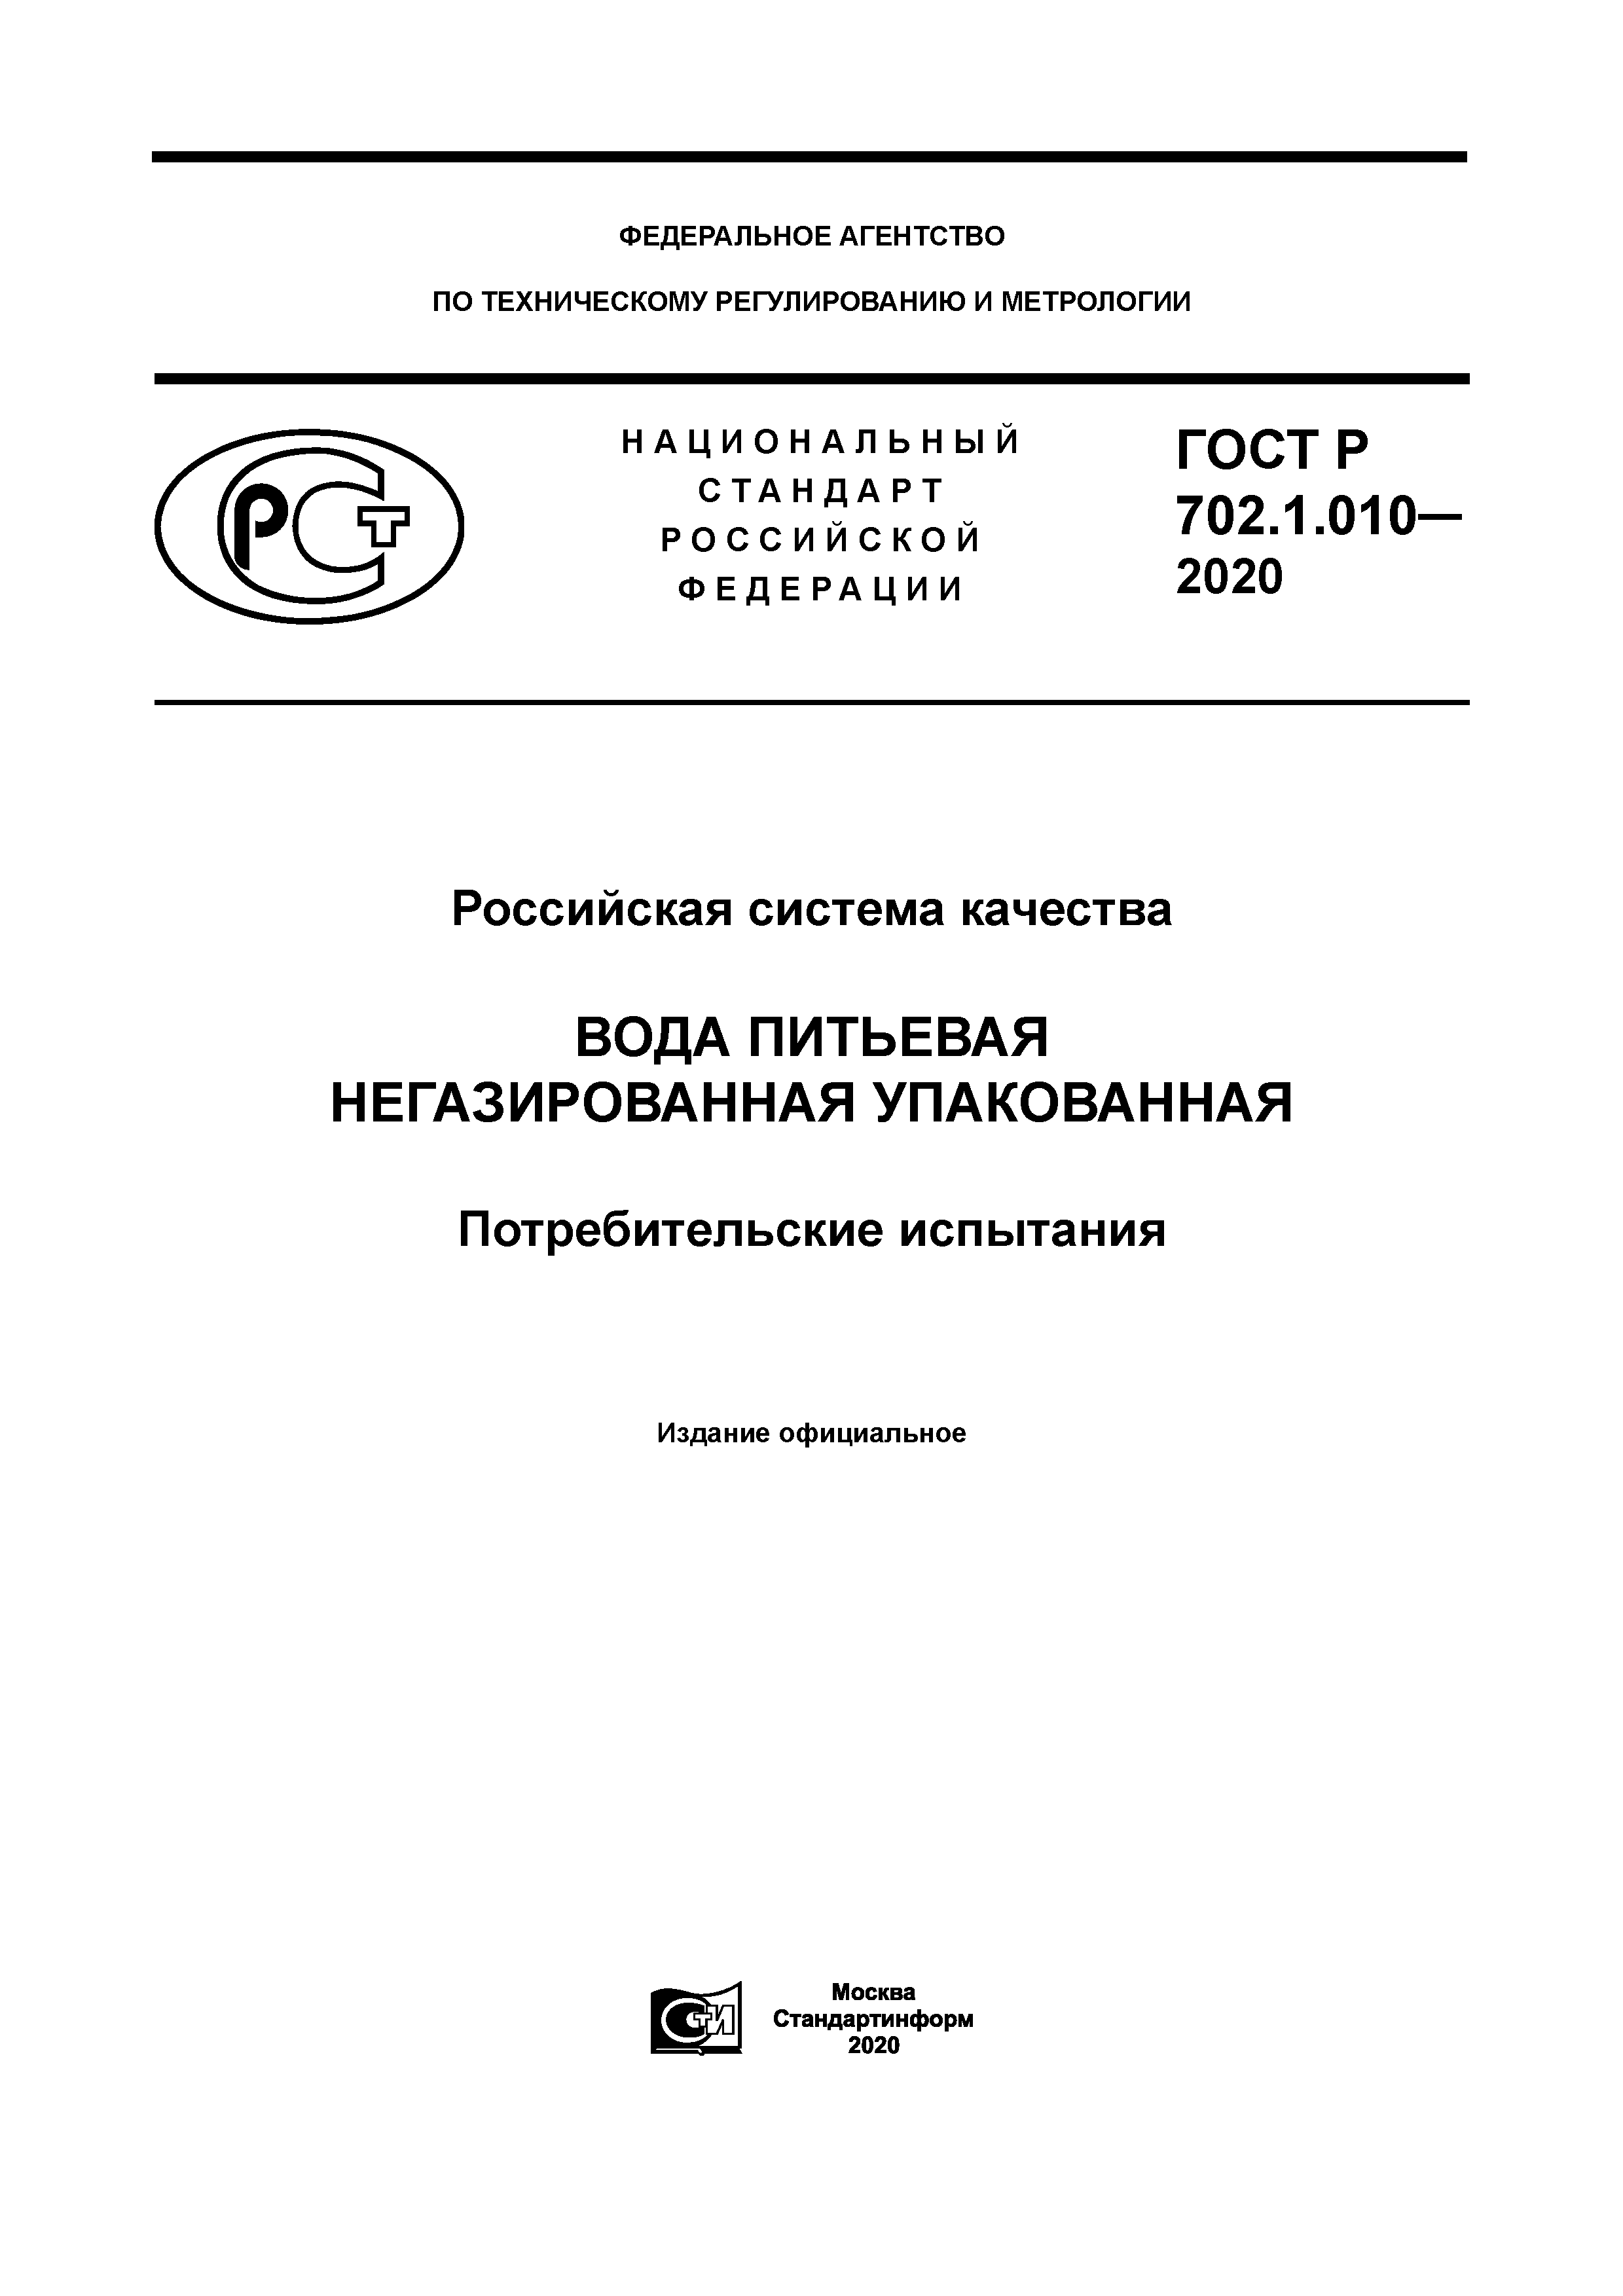 ГОСТ Р 702.1.010-2020